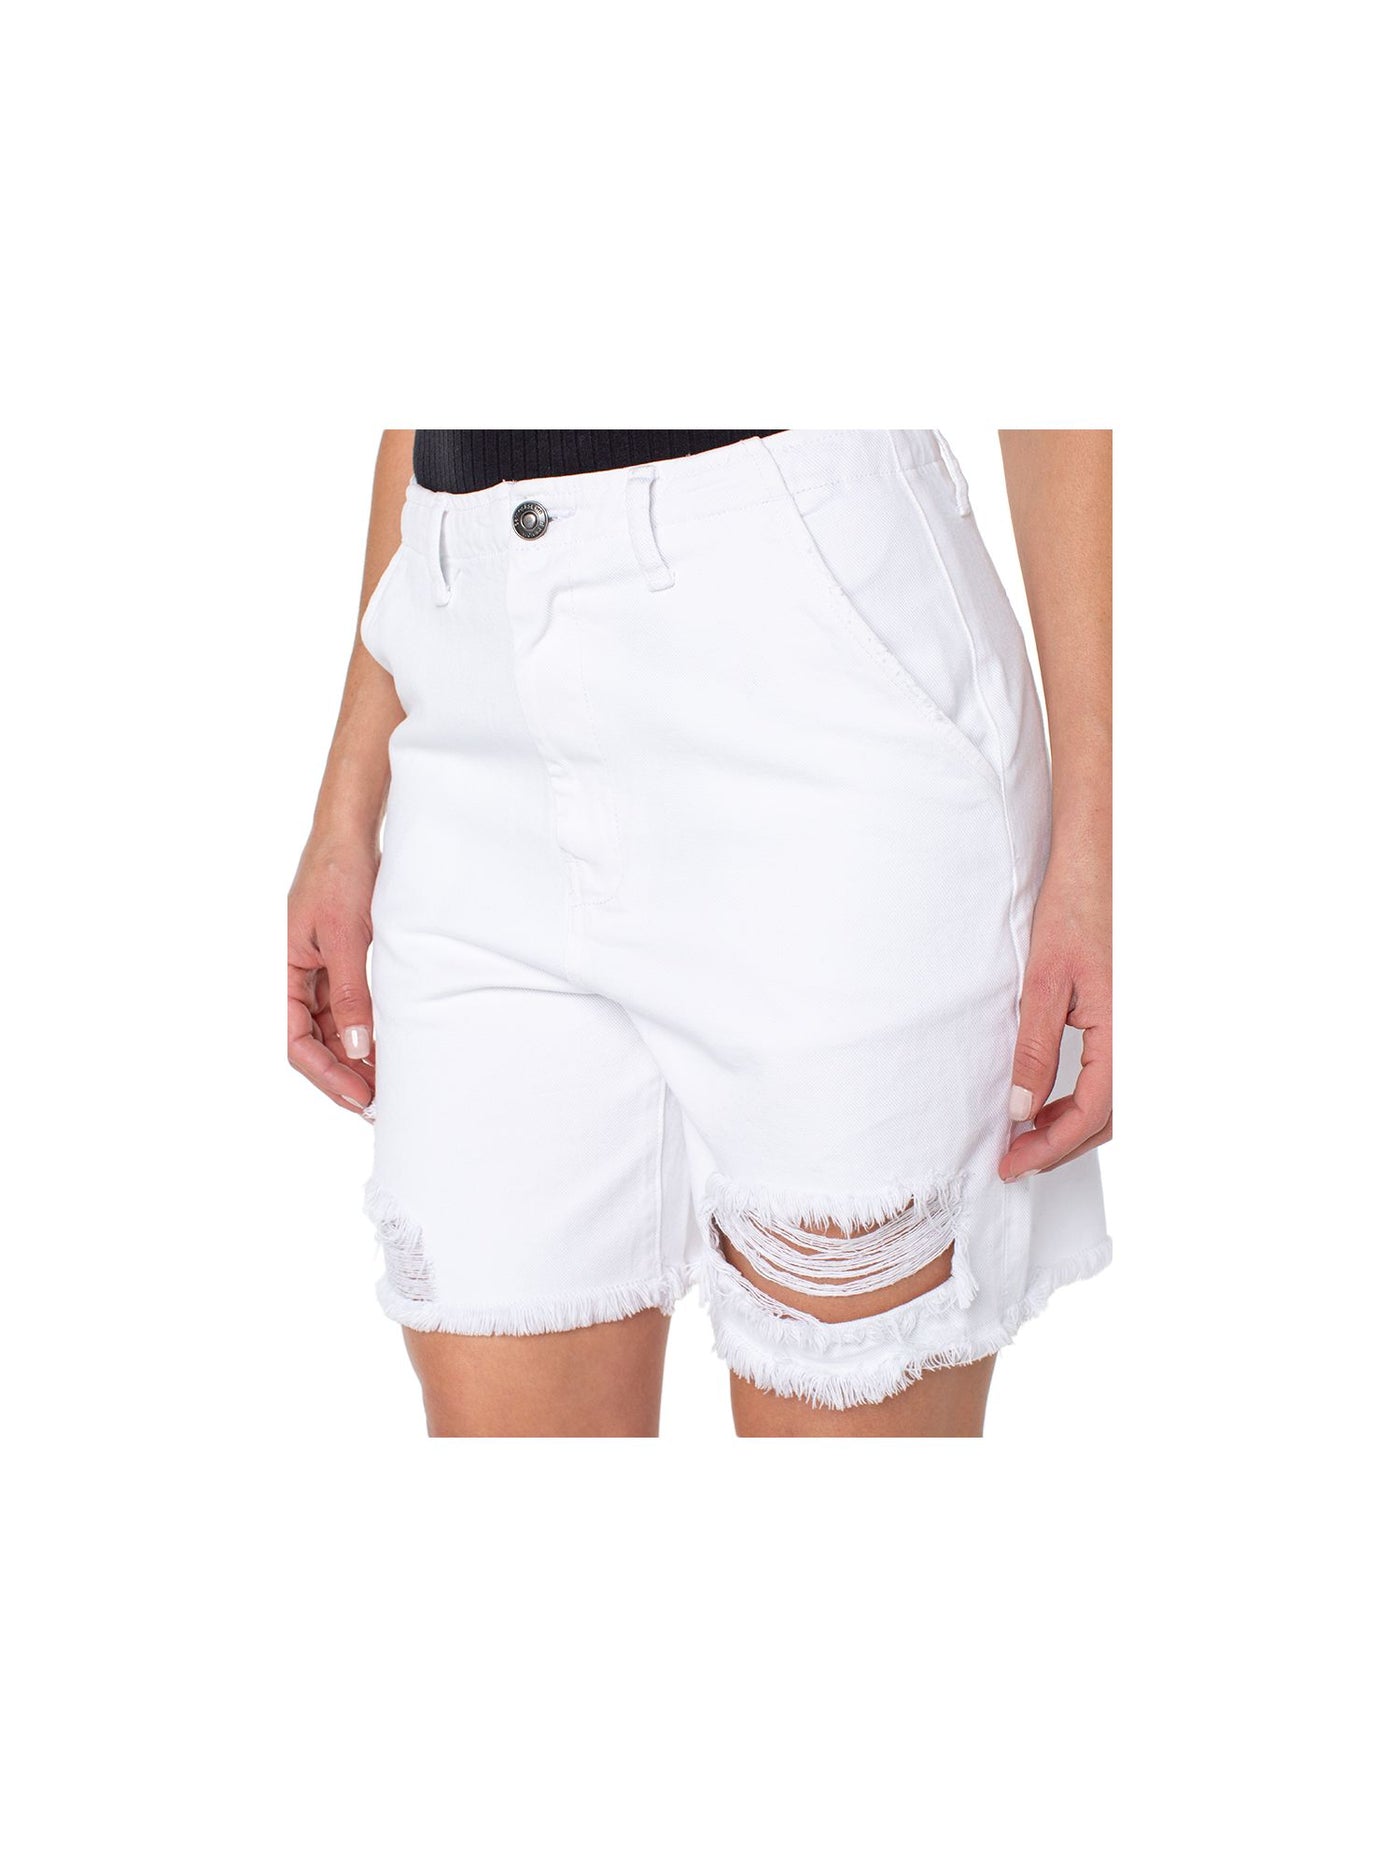 EARNEST SEWN NEW YORK Womens White Zippered Pocketed Frayed Hems High Waist Shorts 34